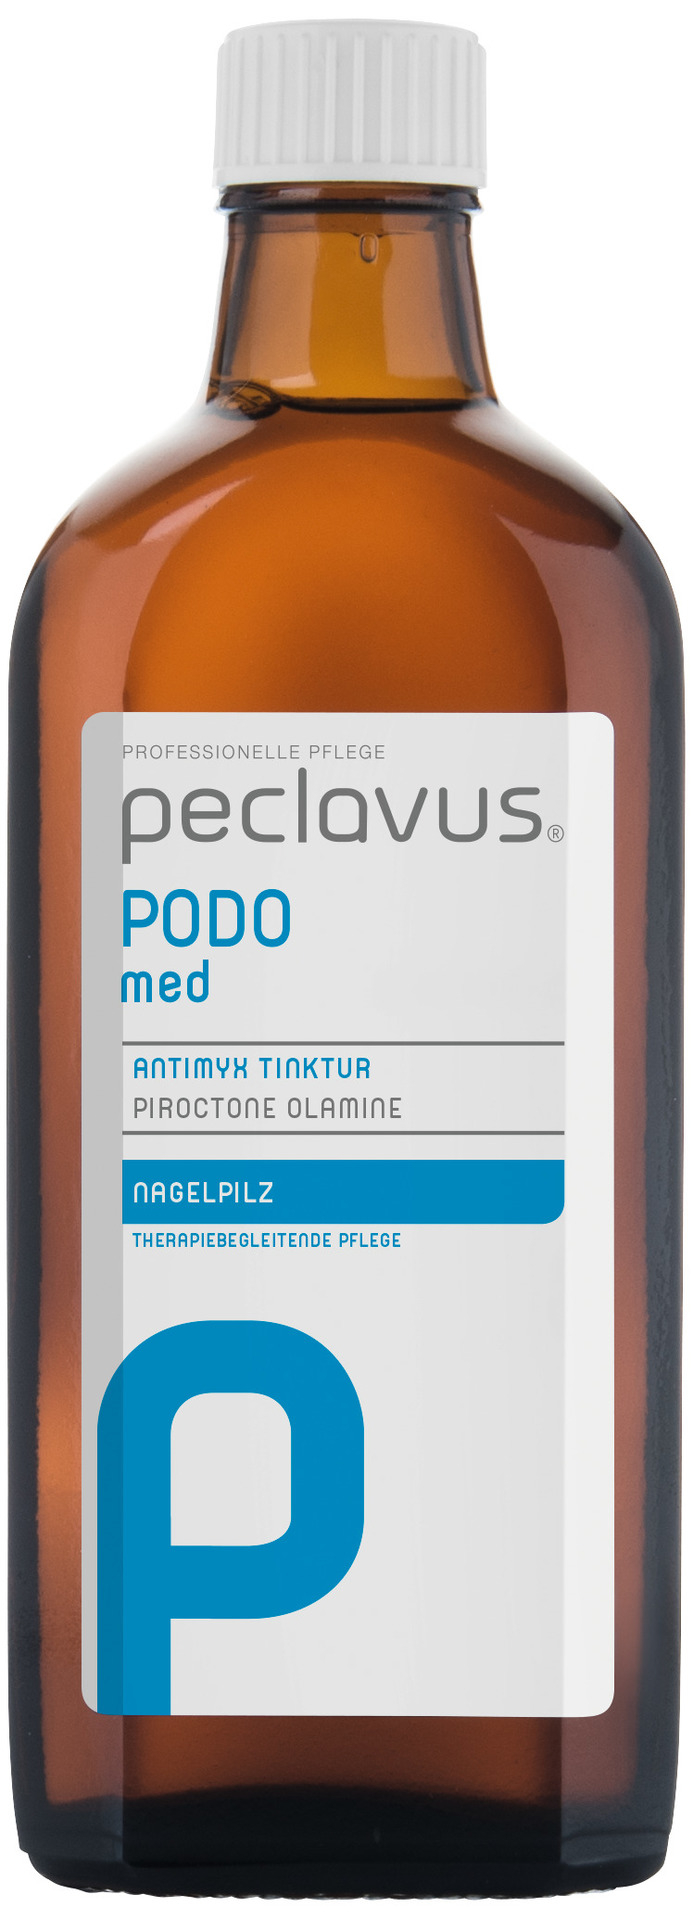 Peclavus  PODOmed AntiMYX Tinktur | 200 ml